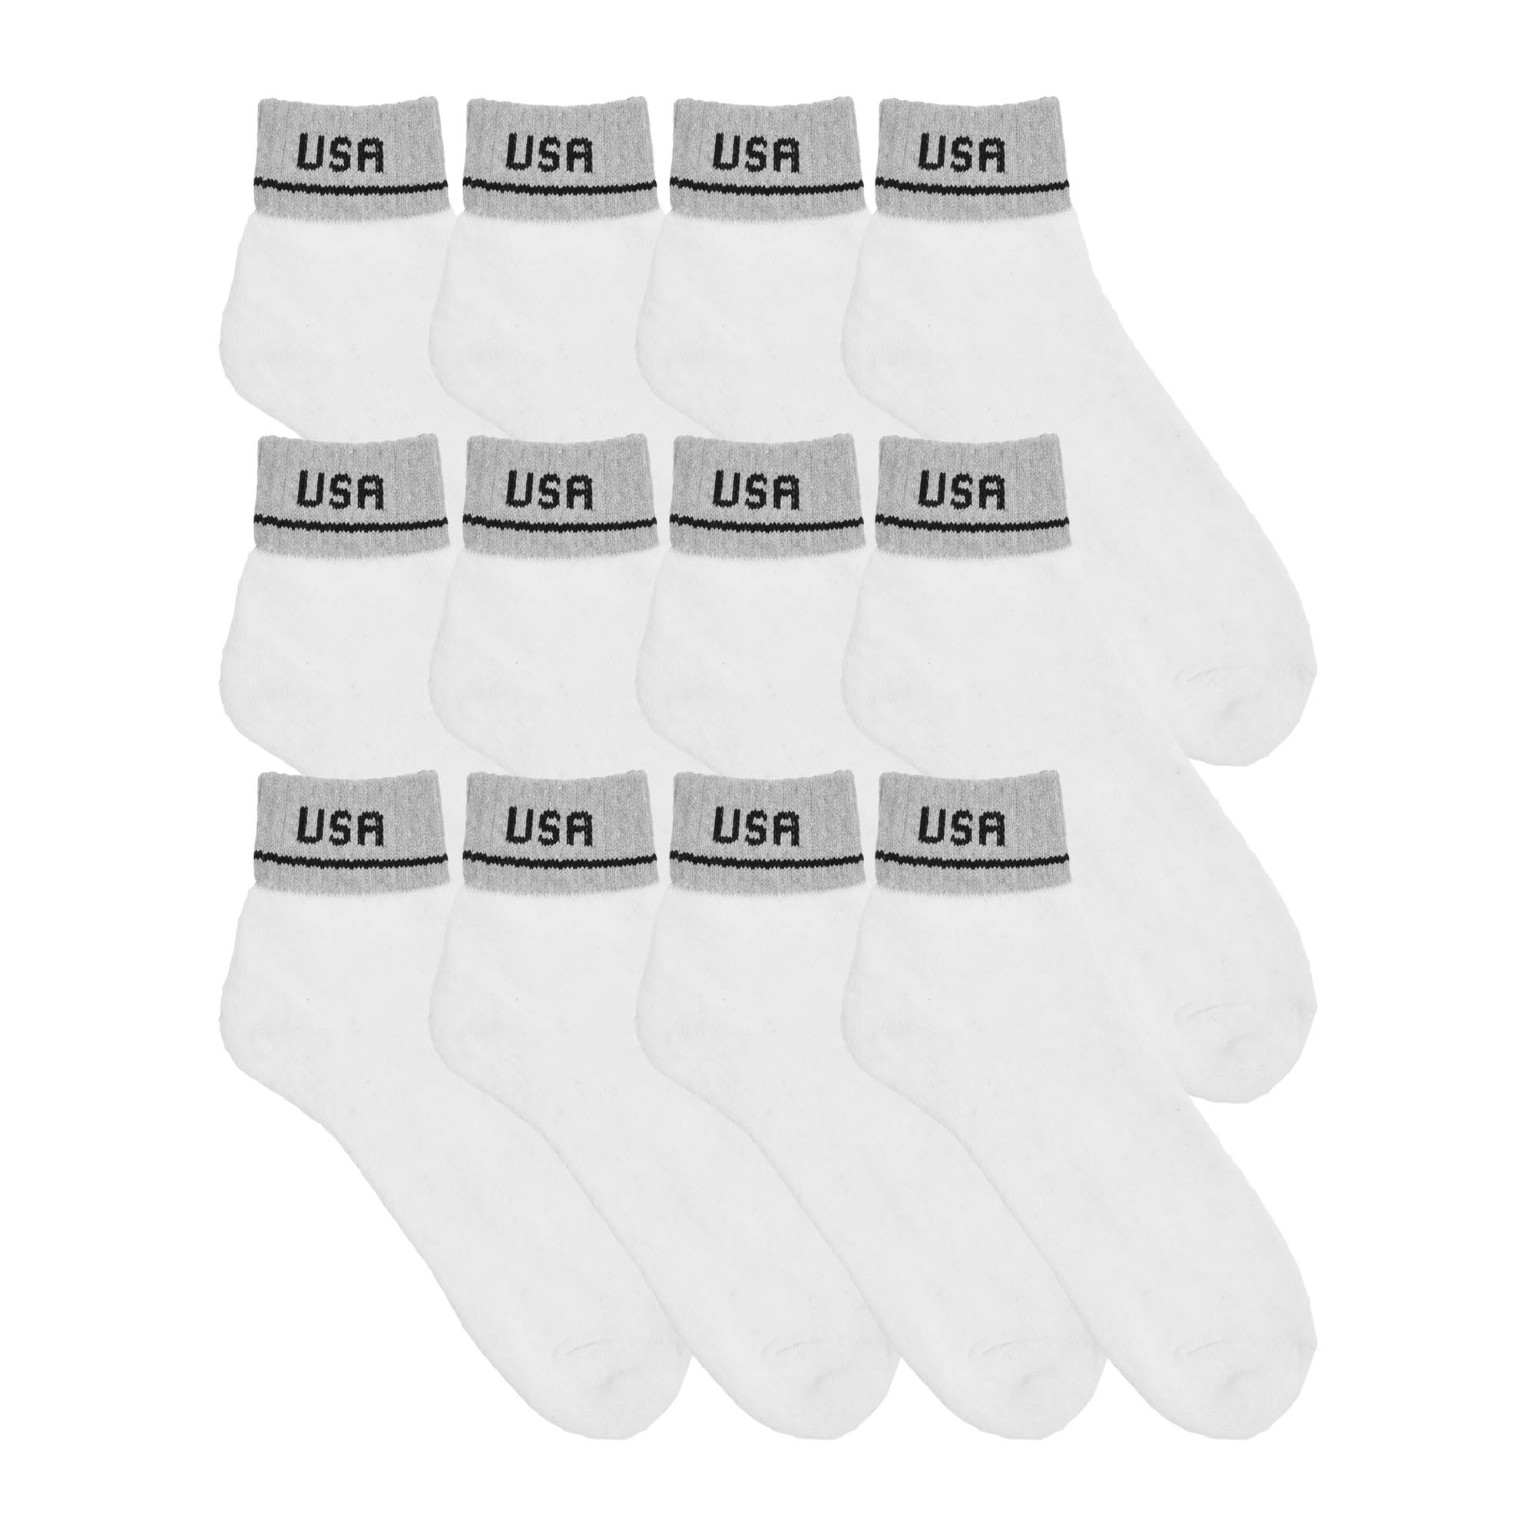 White / Grey Cotton Blend Quarter Socks With USA Logo - Siz(240x$0.64)